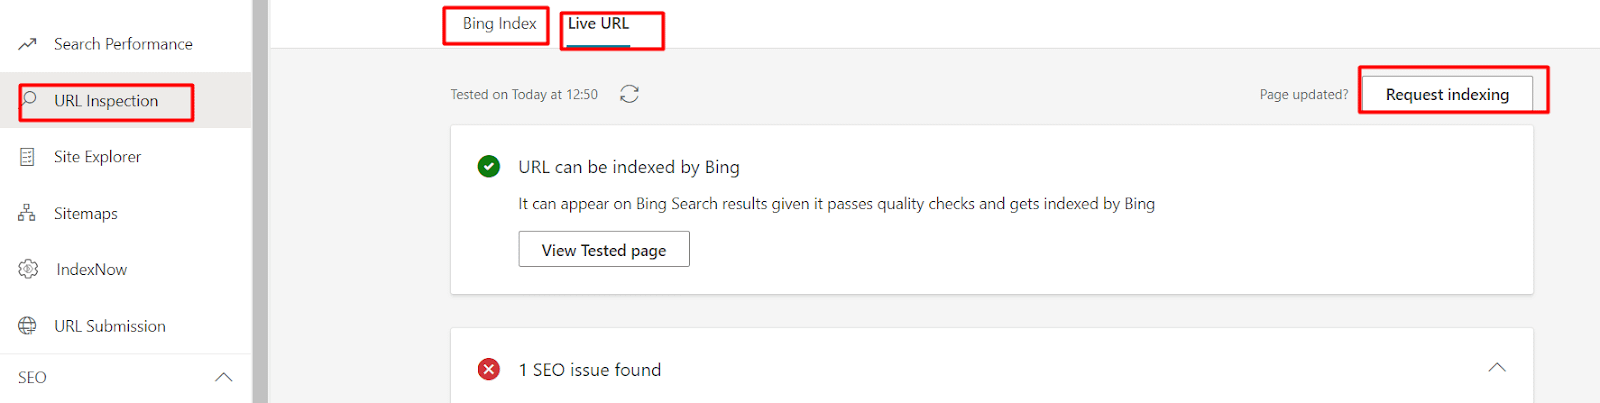 Bing Live URL